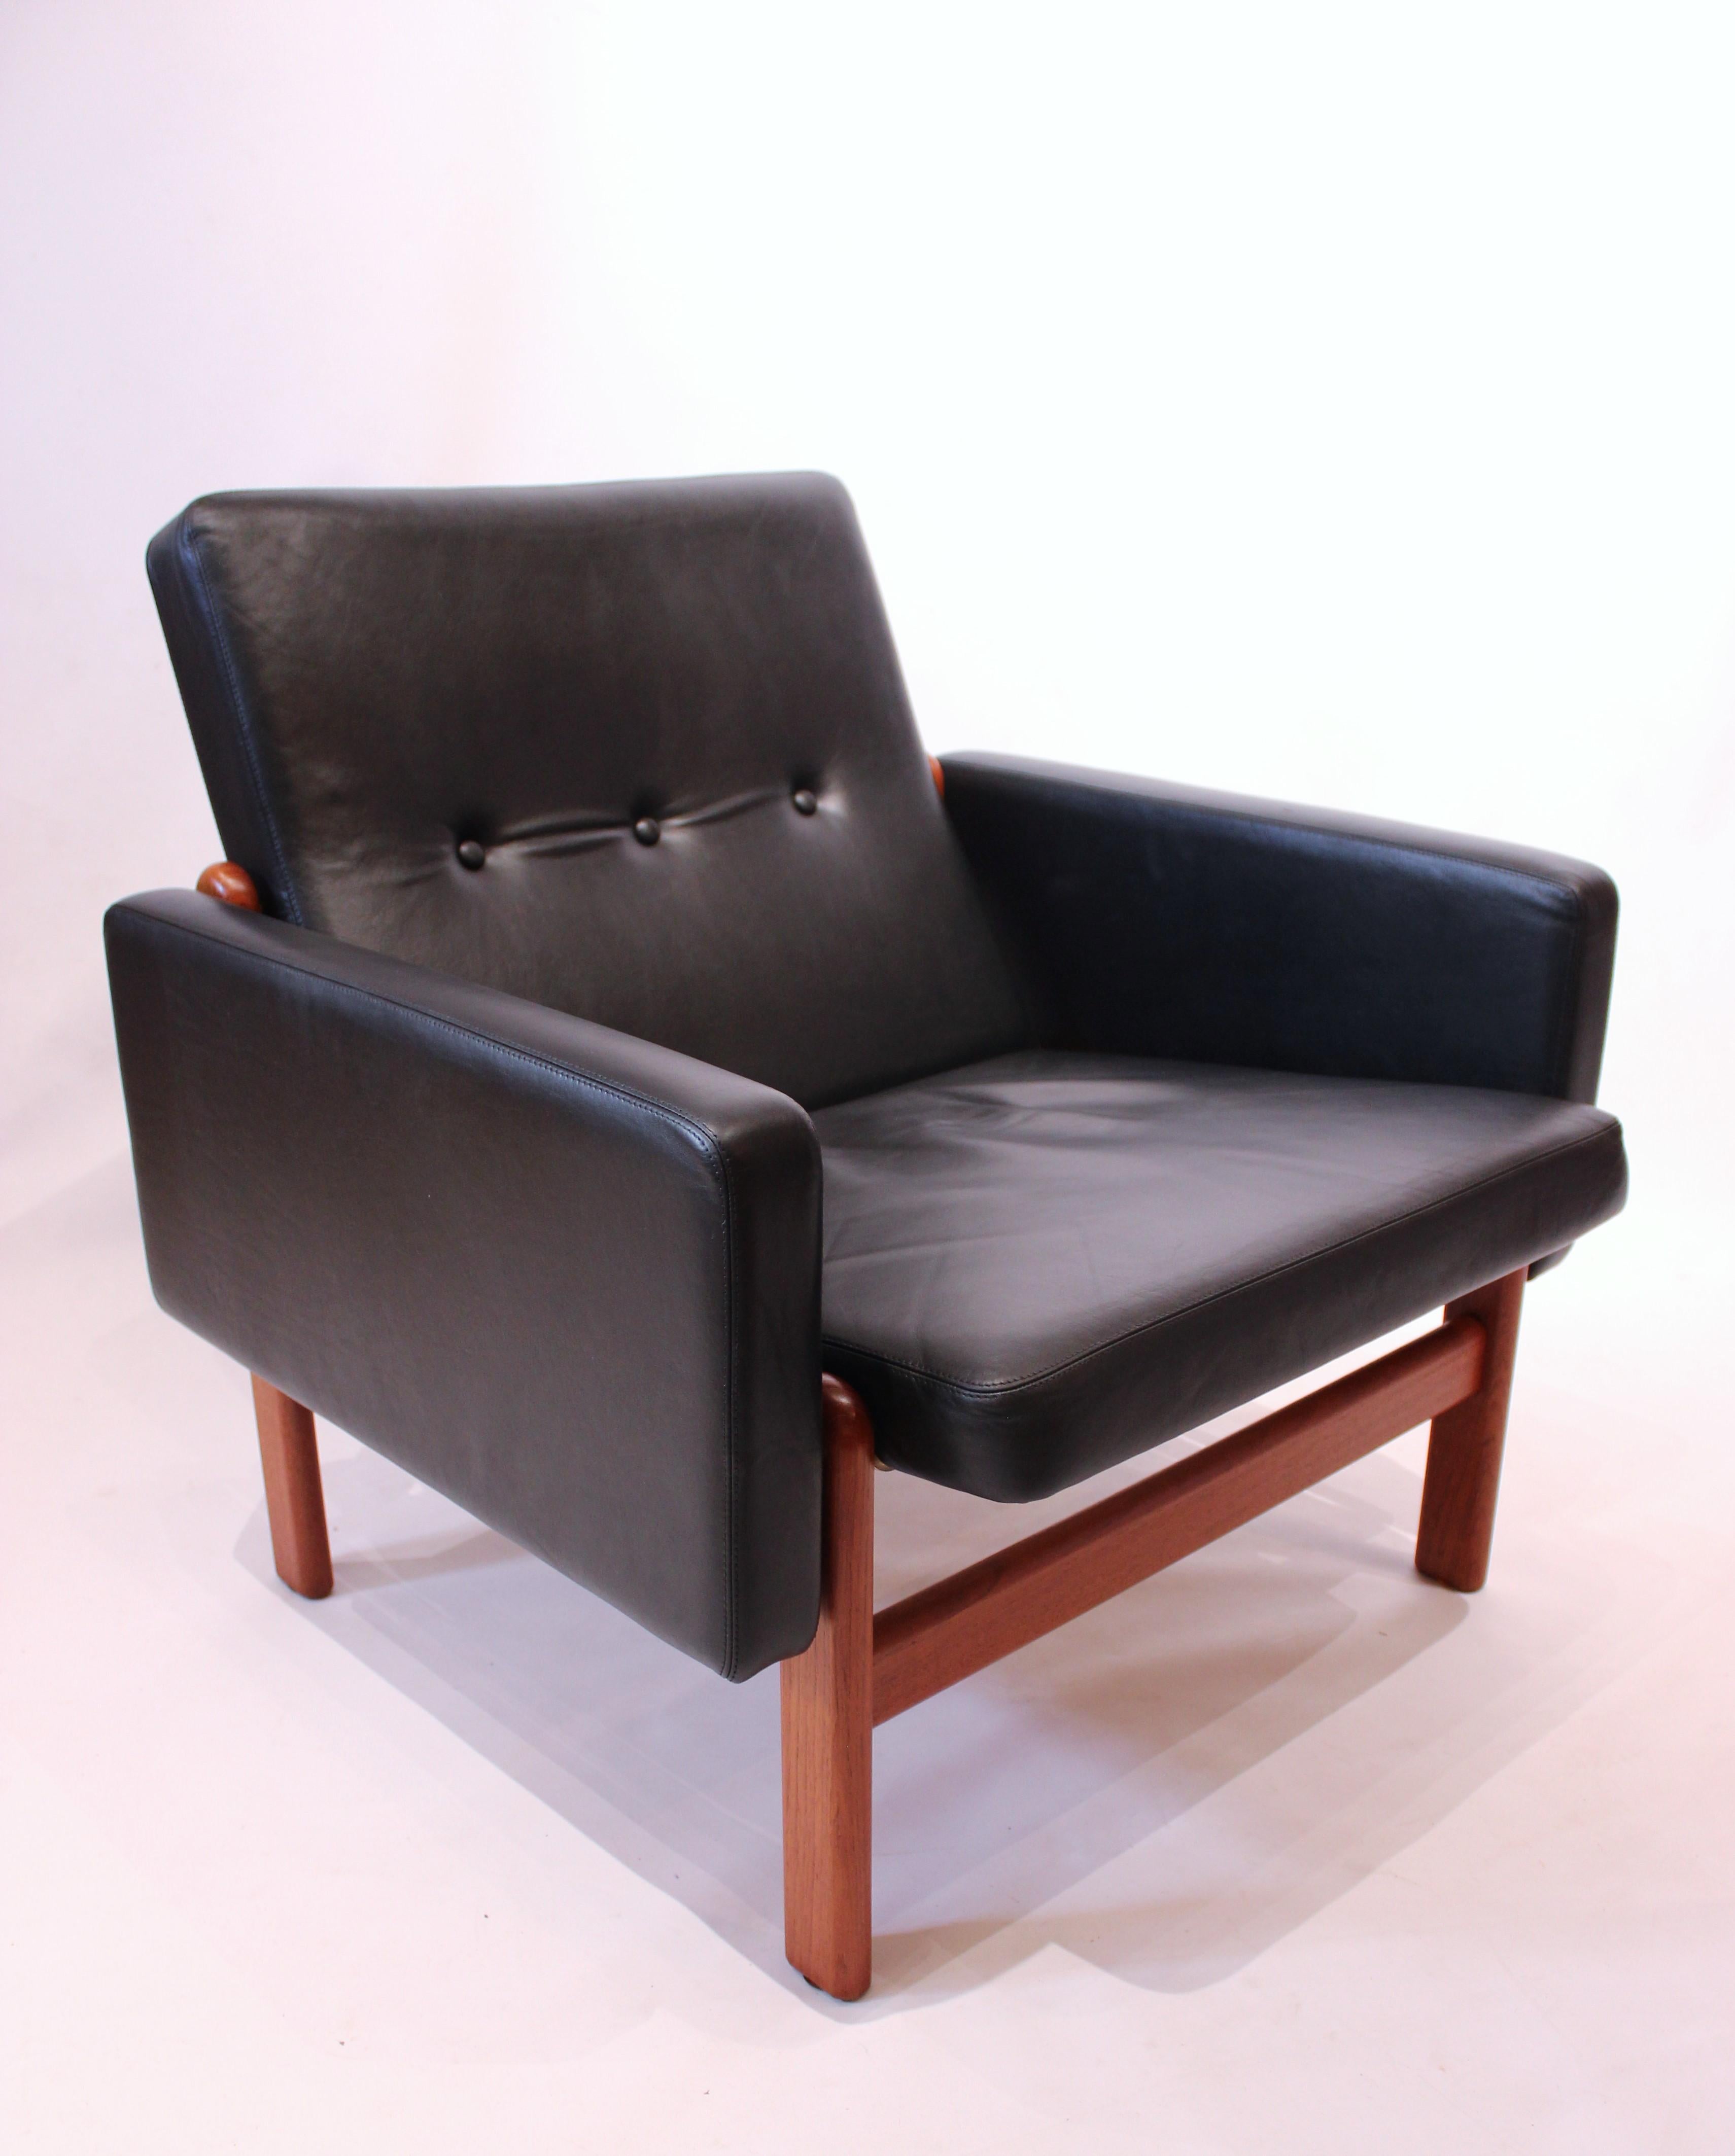 Danish Scandinavian Modern Teak Easy Chair with Stool, by Jørgen Bækmark and FDB, 1960s For Sale